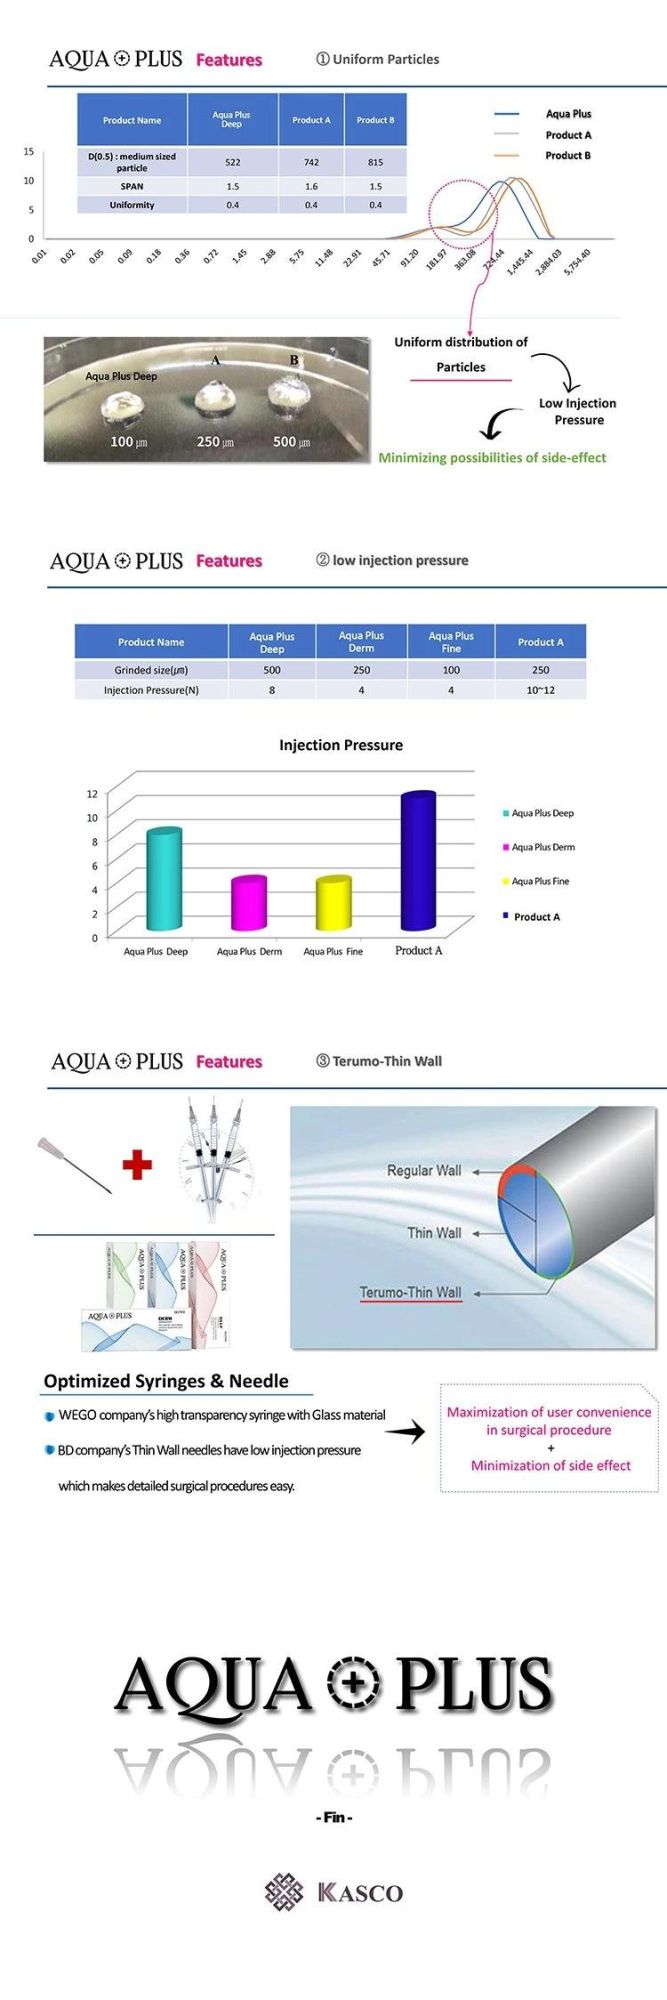 Aqua Plus Injection to Buy Injectable Dermal Filler 2ml Lip Fullness Hyaluronic Acid Filler